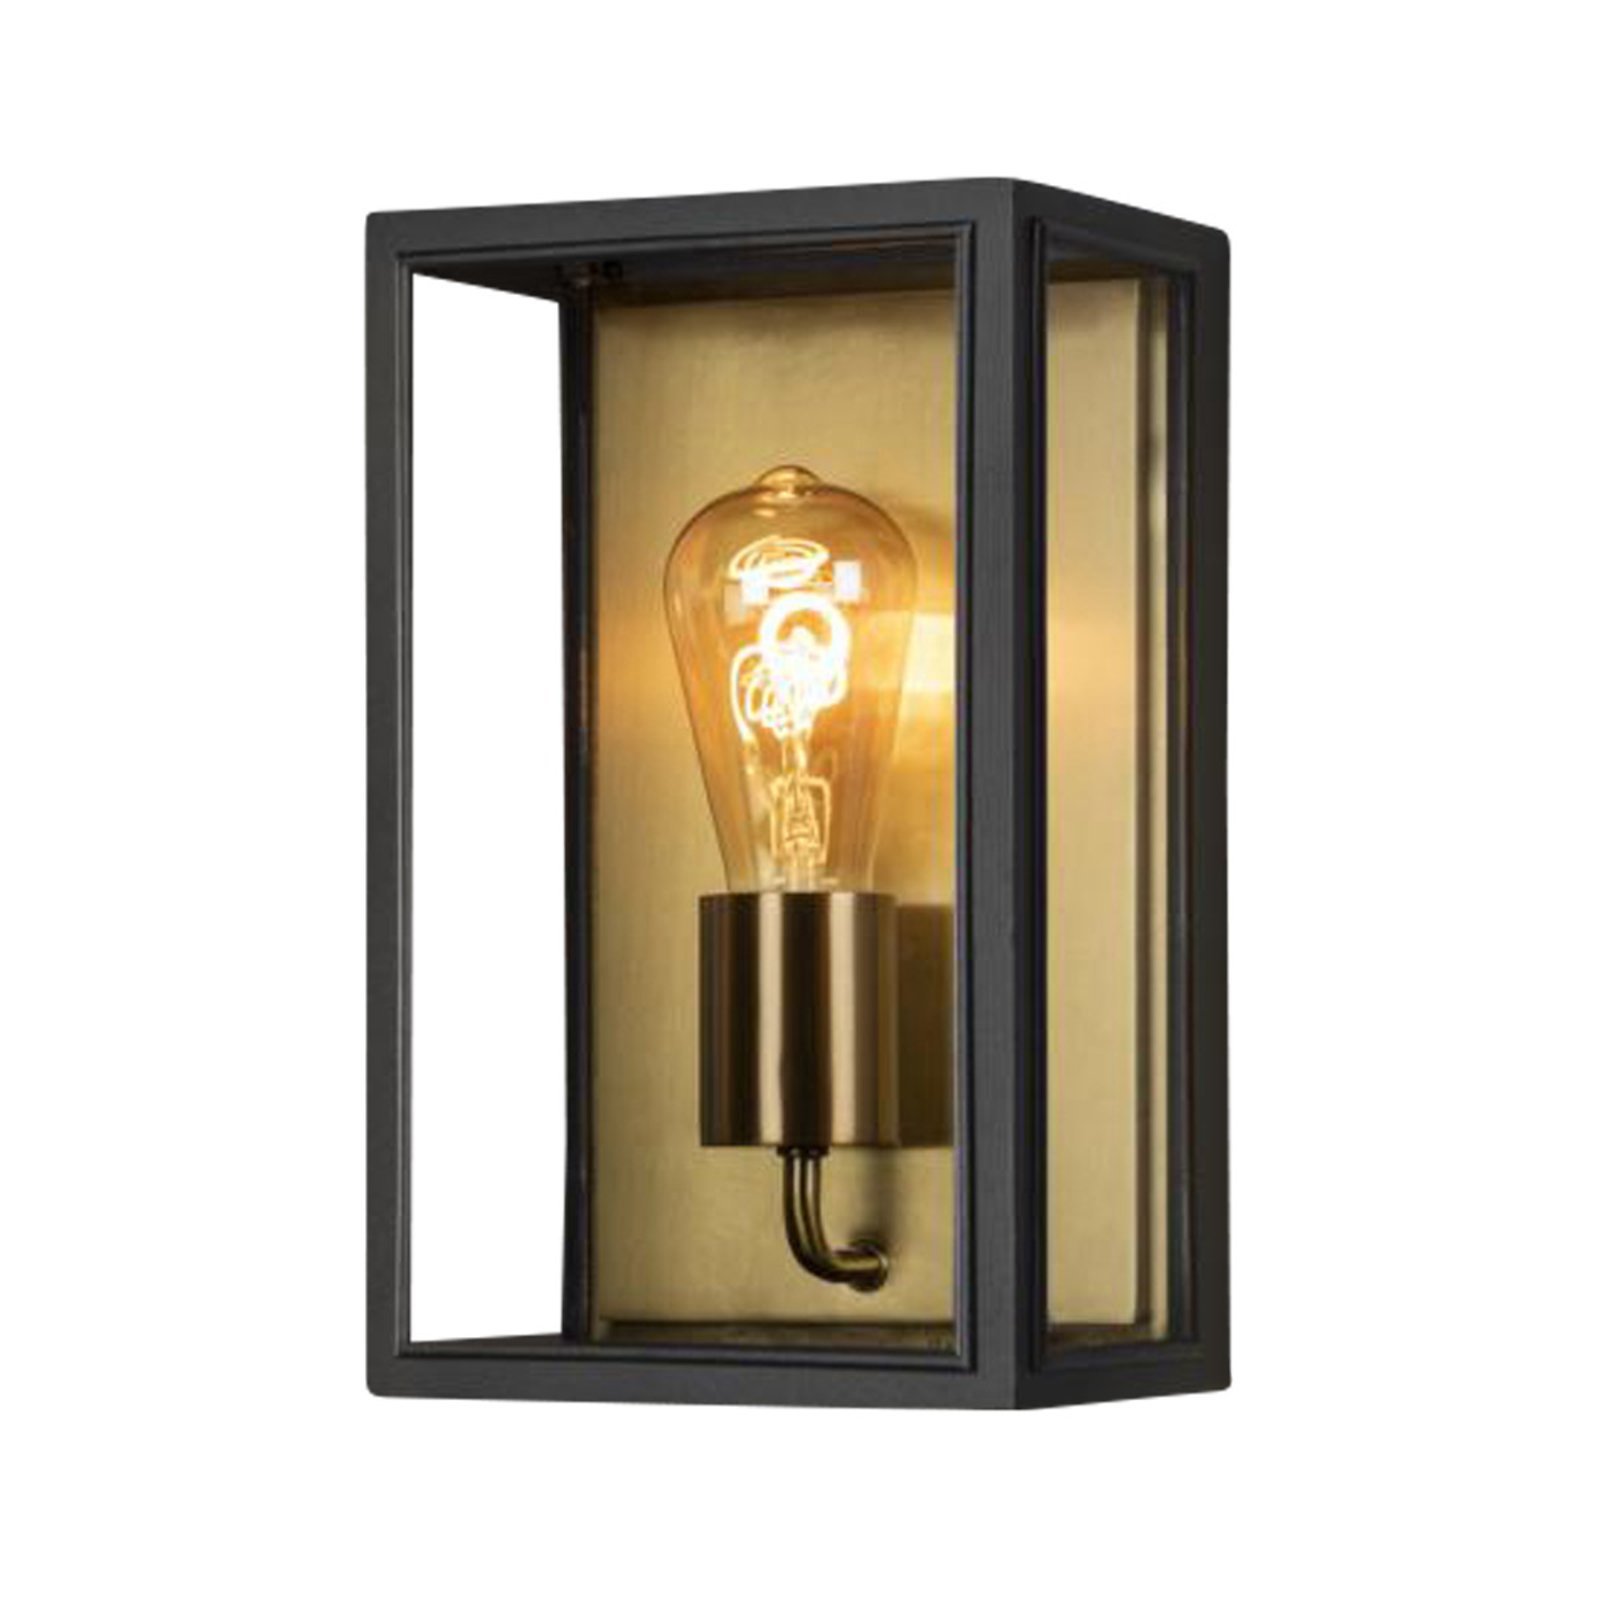 Carpi outdoor wall lamp, black, width 18cm